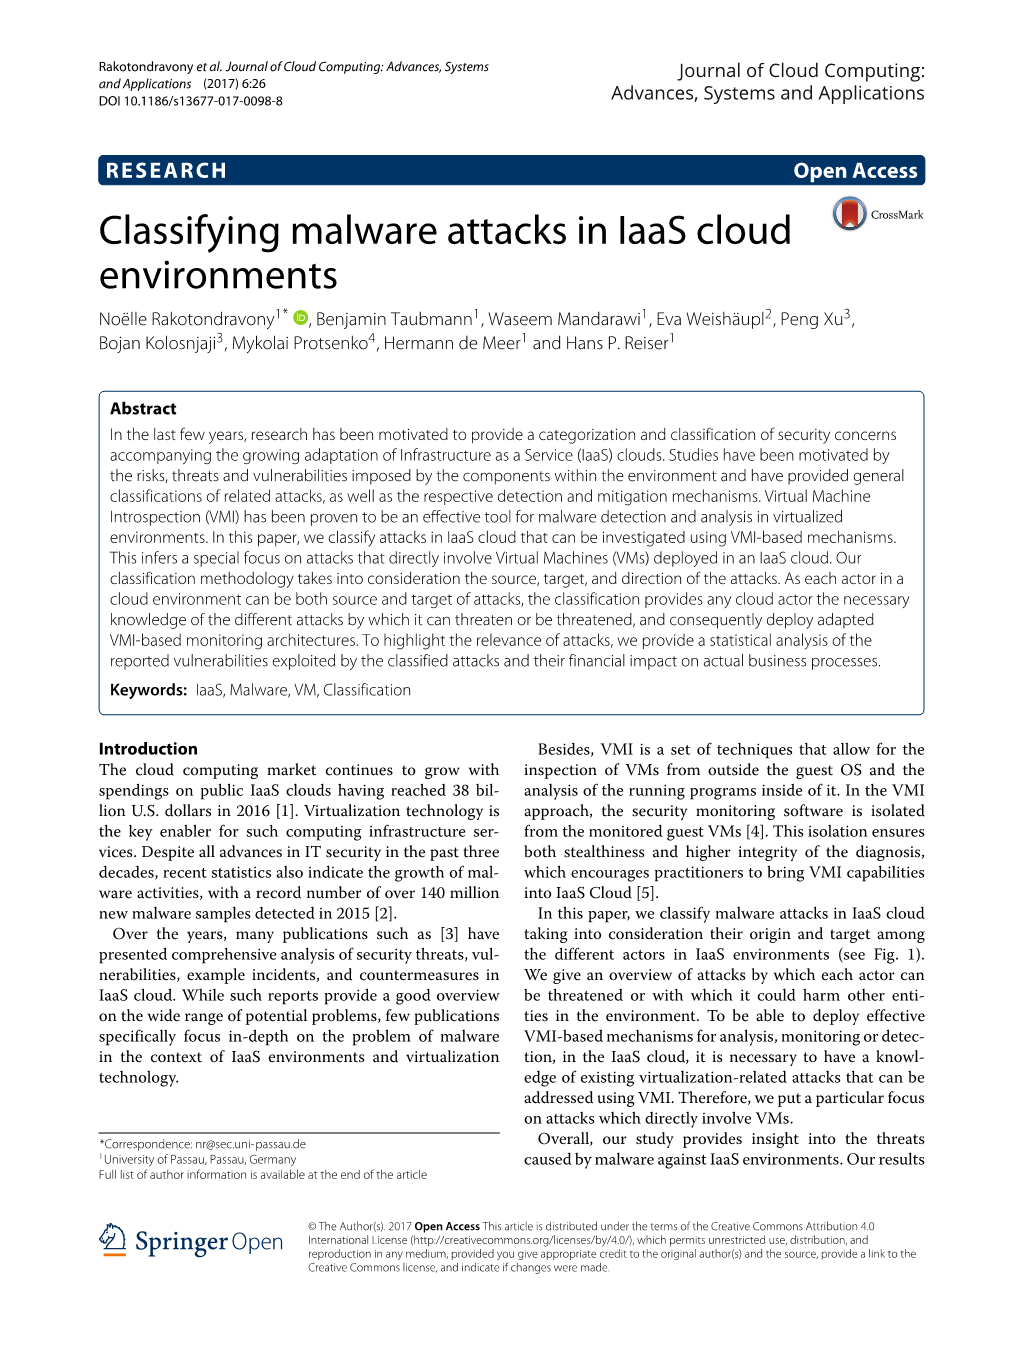 Classifying Malware Attacks in Iaas Cloud Environments